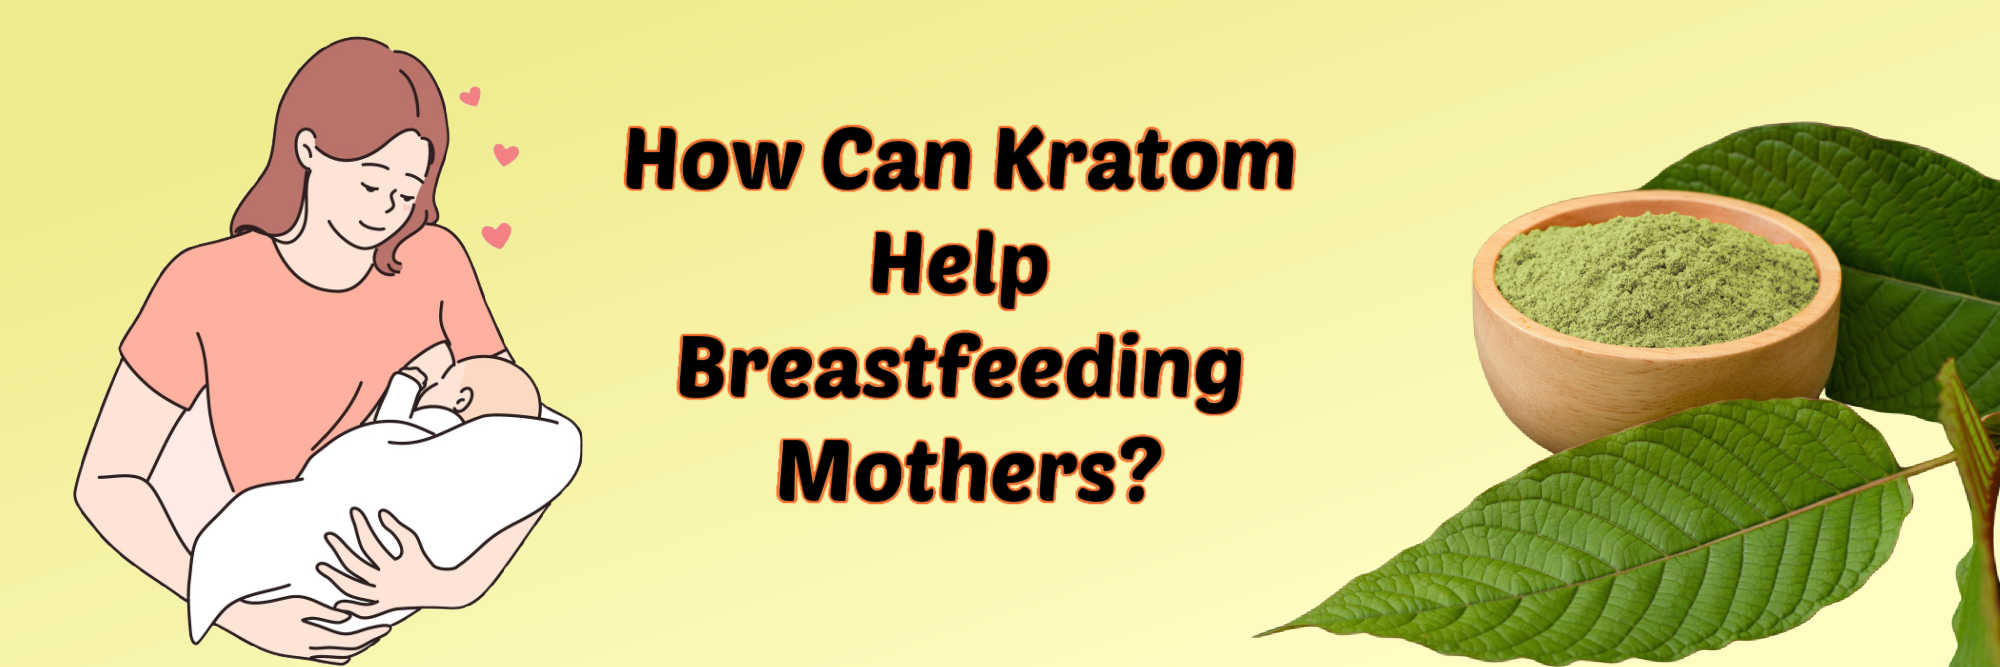 image of how can kratom help breastfeeding mothers